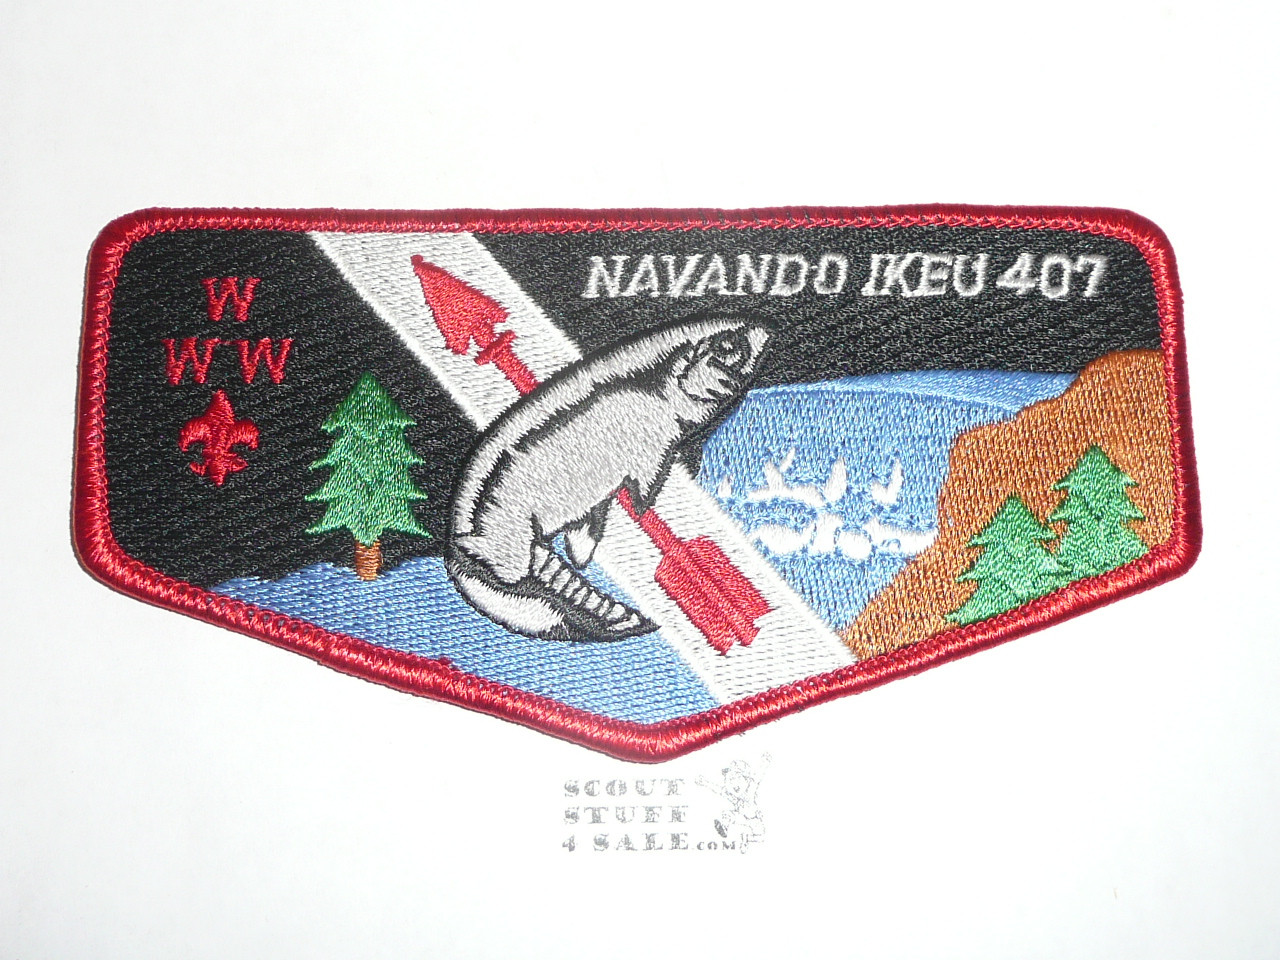 Order of the Arrow Lodge #407 Navando Ikeu s24 Flap Patch - Boy Scout